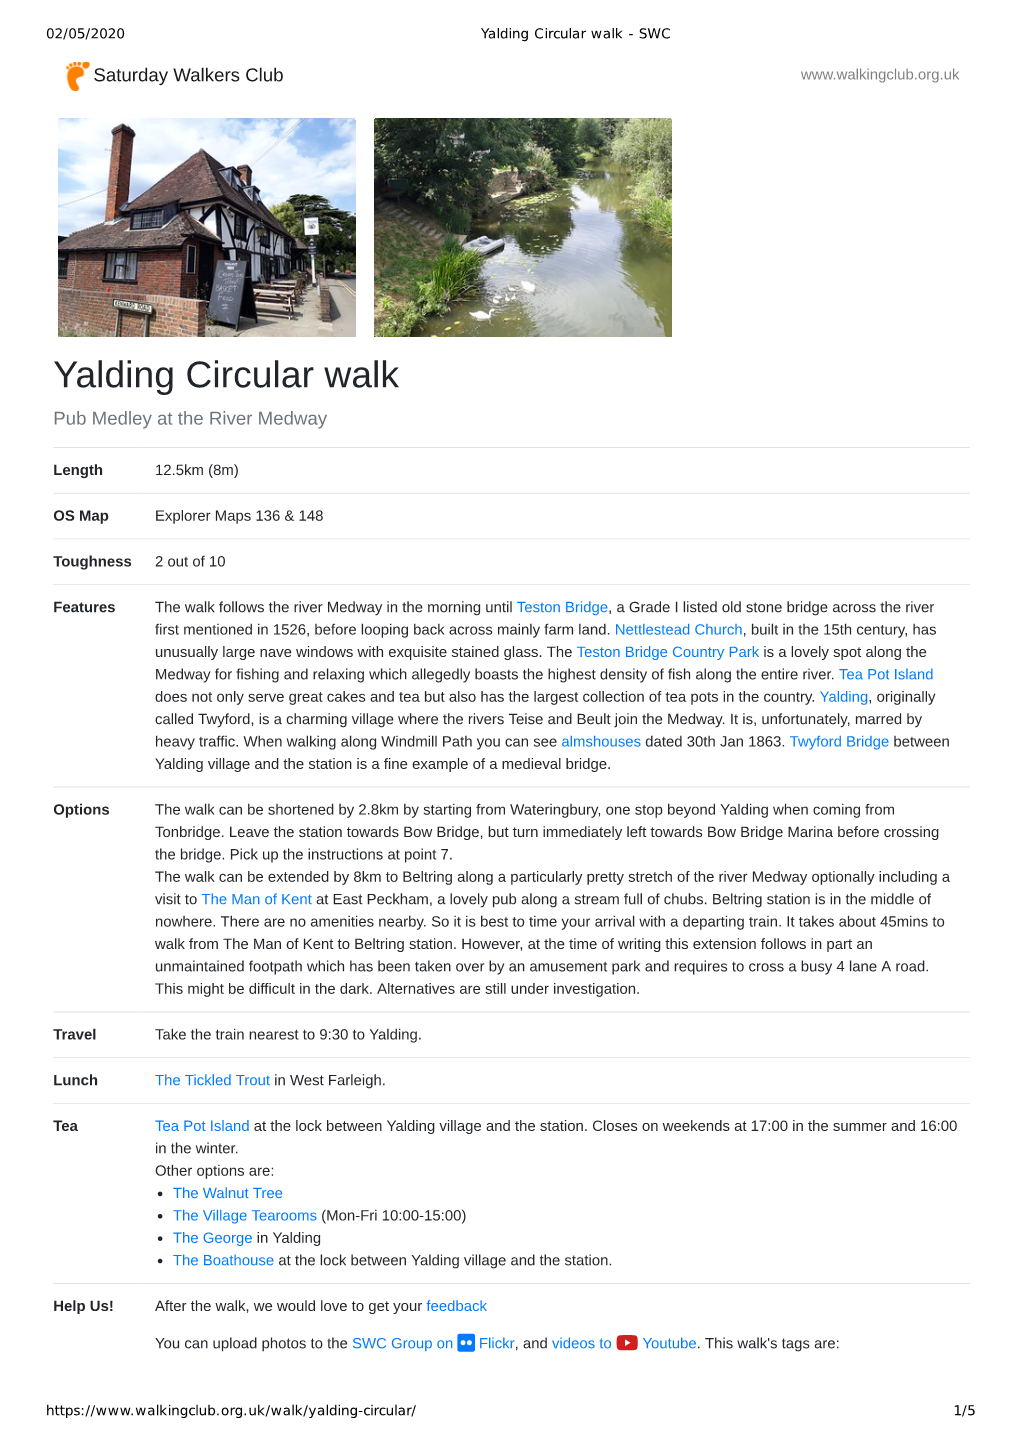 Yalding Circular Walk - SWC